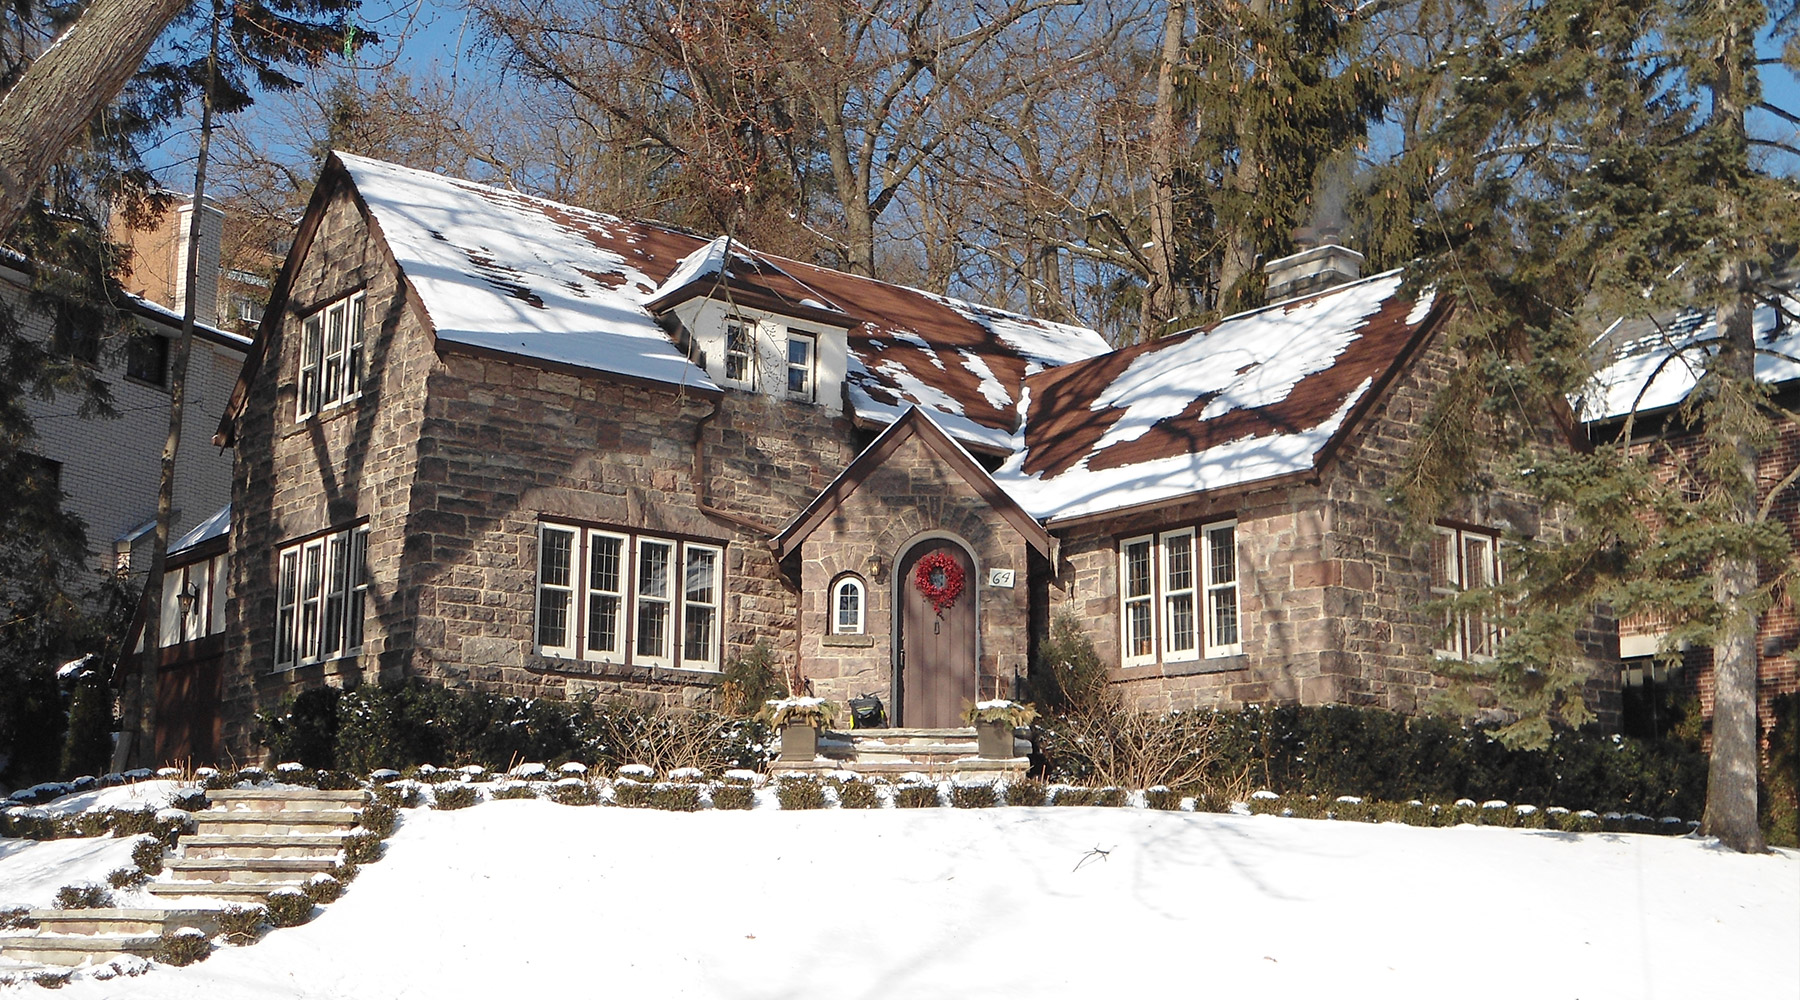 Tudor style home in snow.